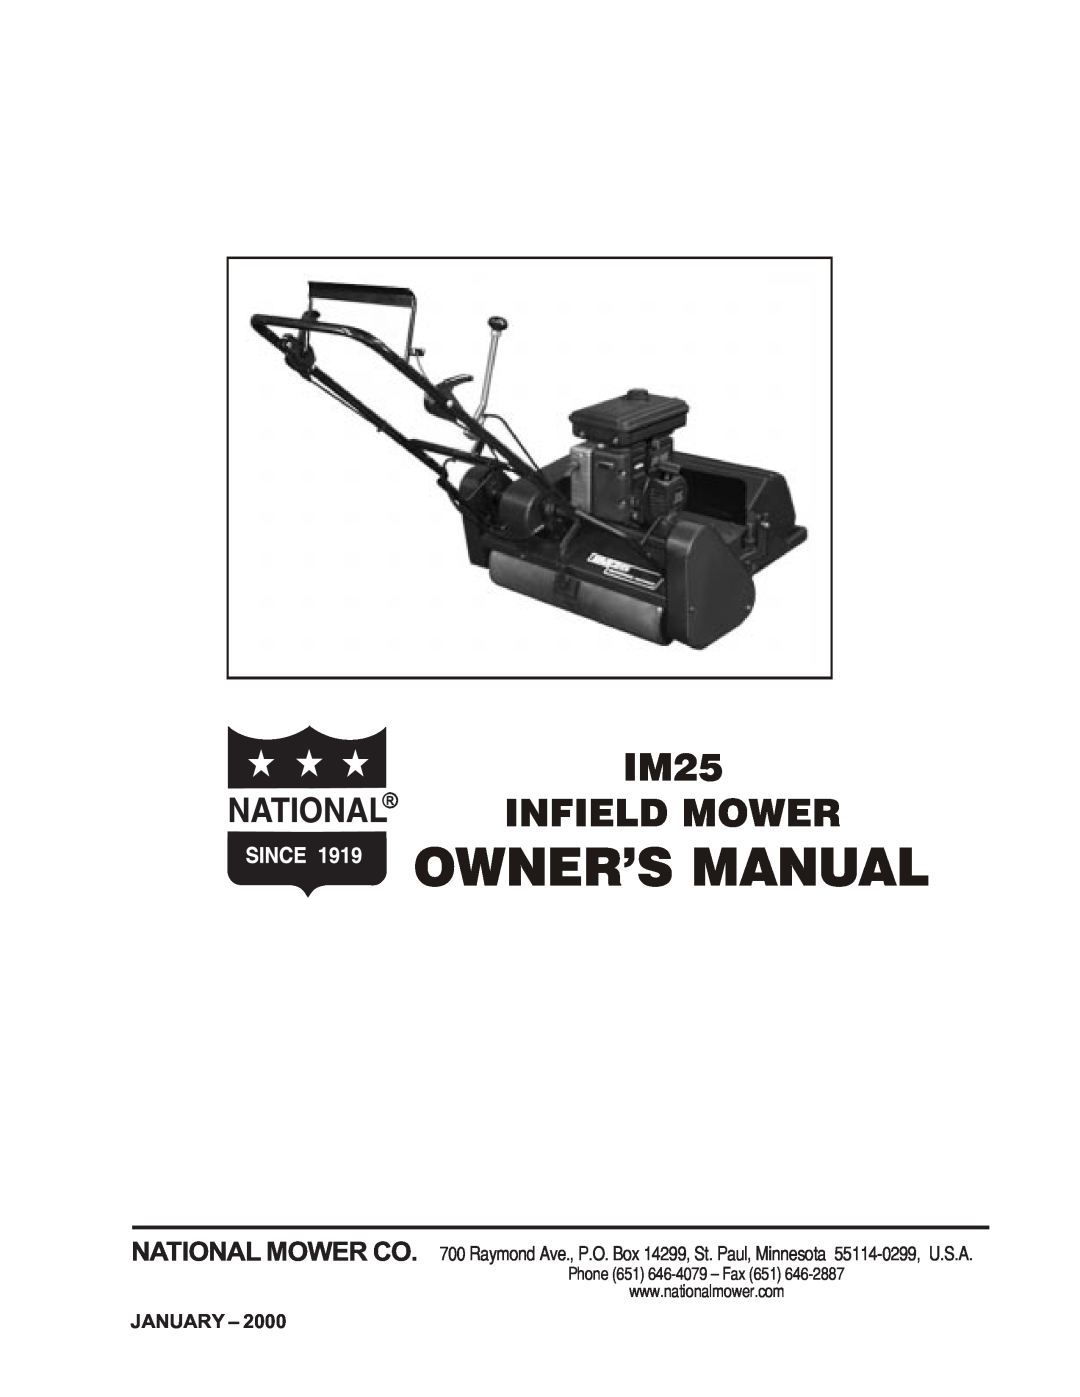 National Mower manual Owner’S Manual, IM25 INFIELD MOWER, January 